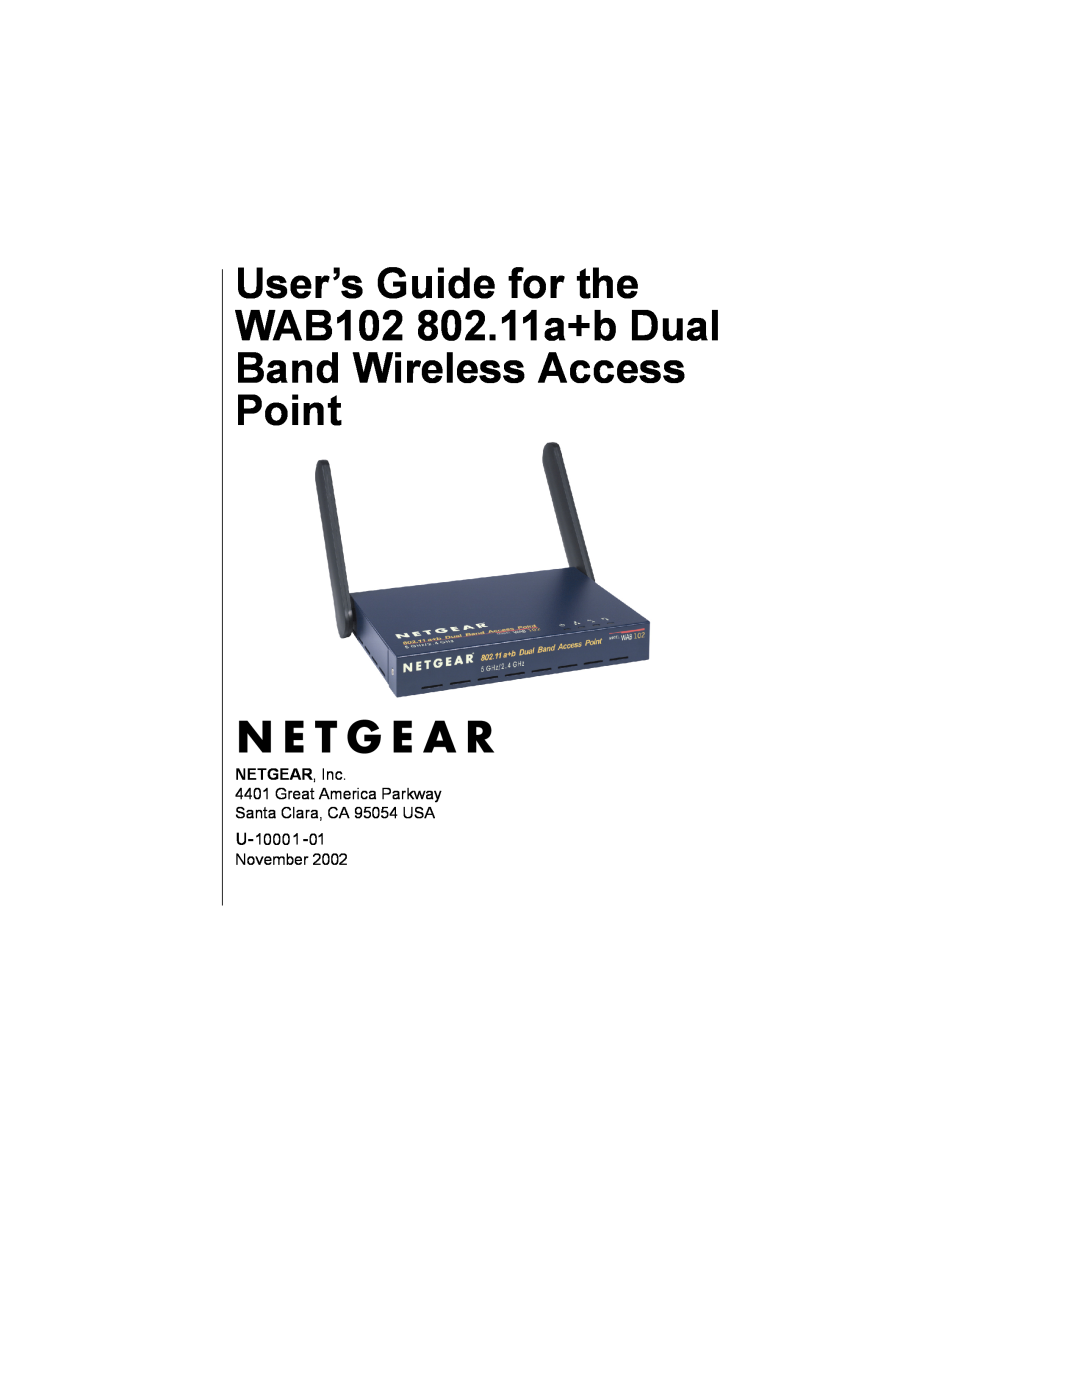 NETGEAR manual User’s Guide for the WAB102 802.11a+b Dual Band Wireless Access Point, NETGEAR, Inc 